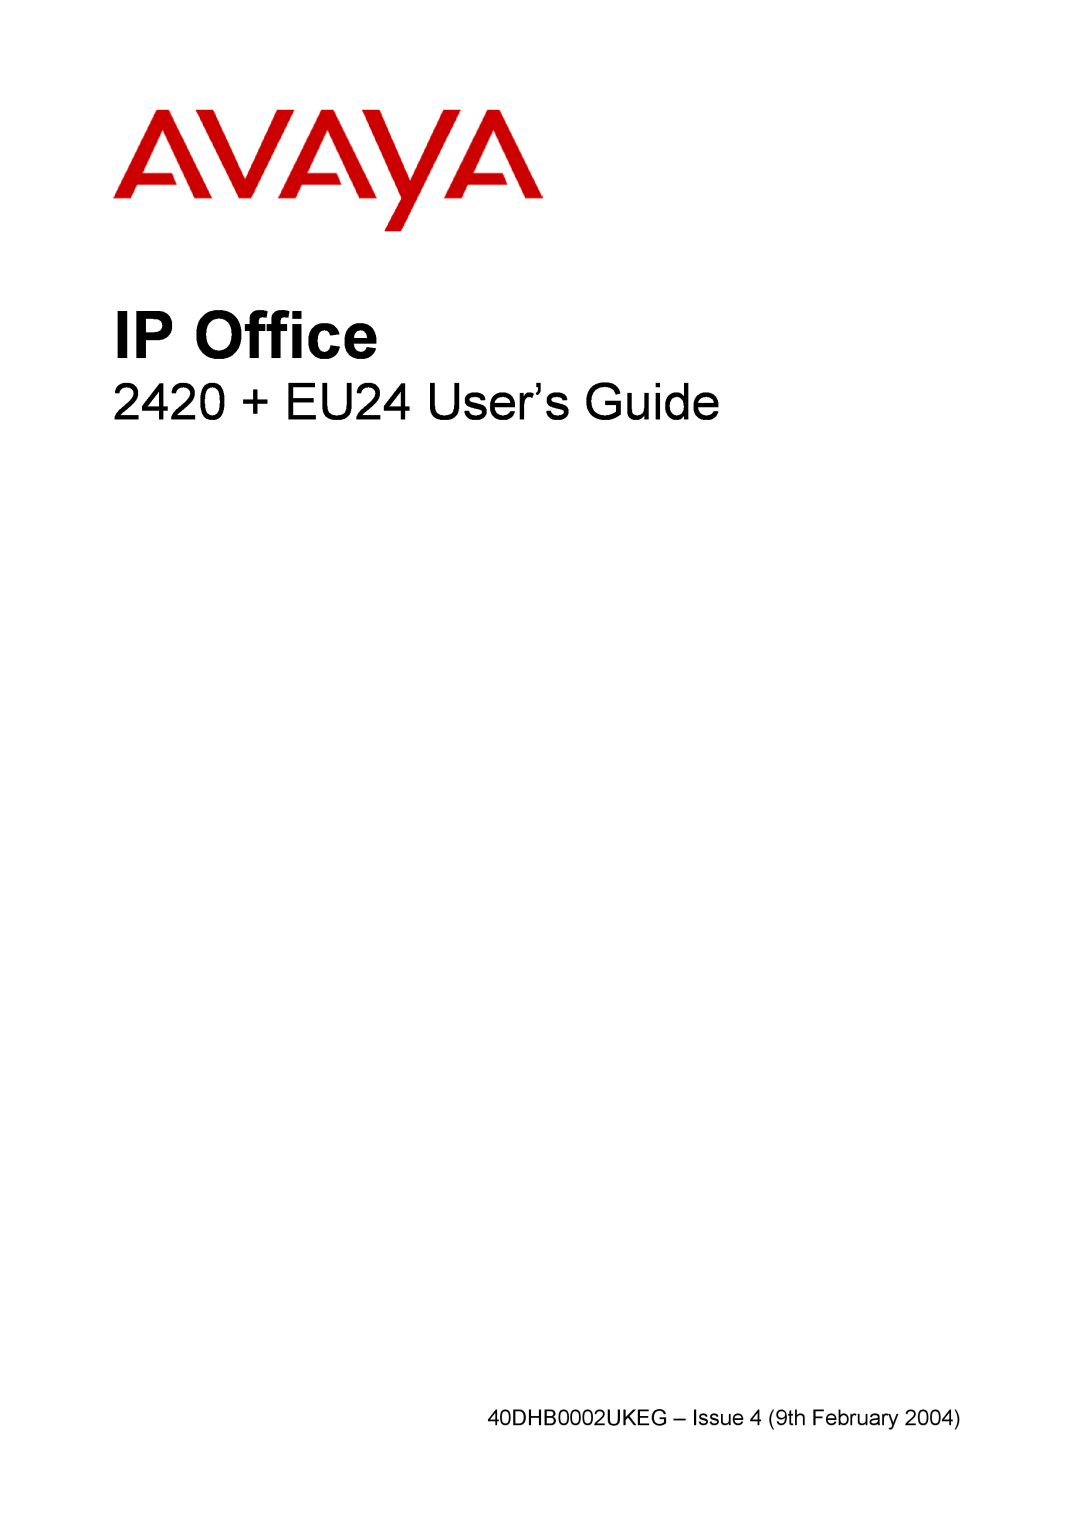 Avaya manual IP Office, 2420 + EU24 User’s Guide 